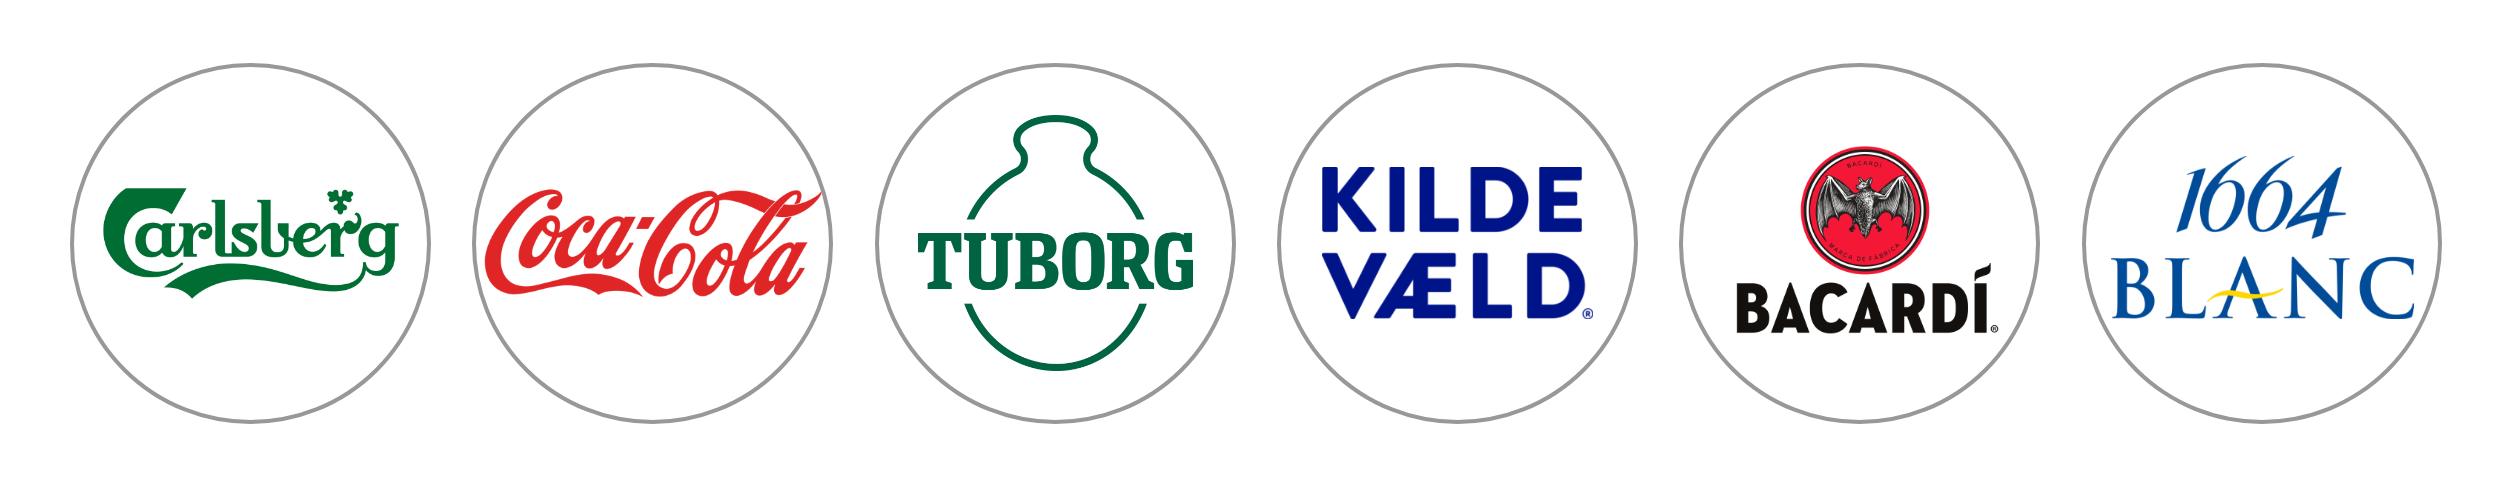 carlsberg brands